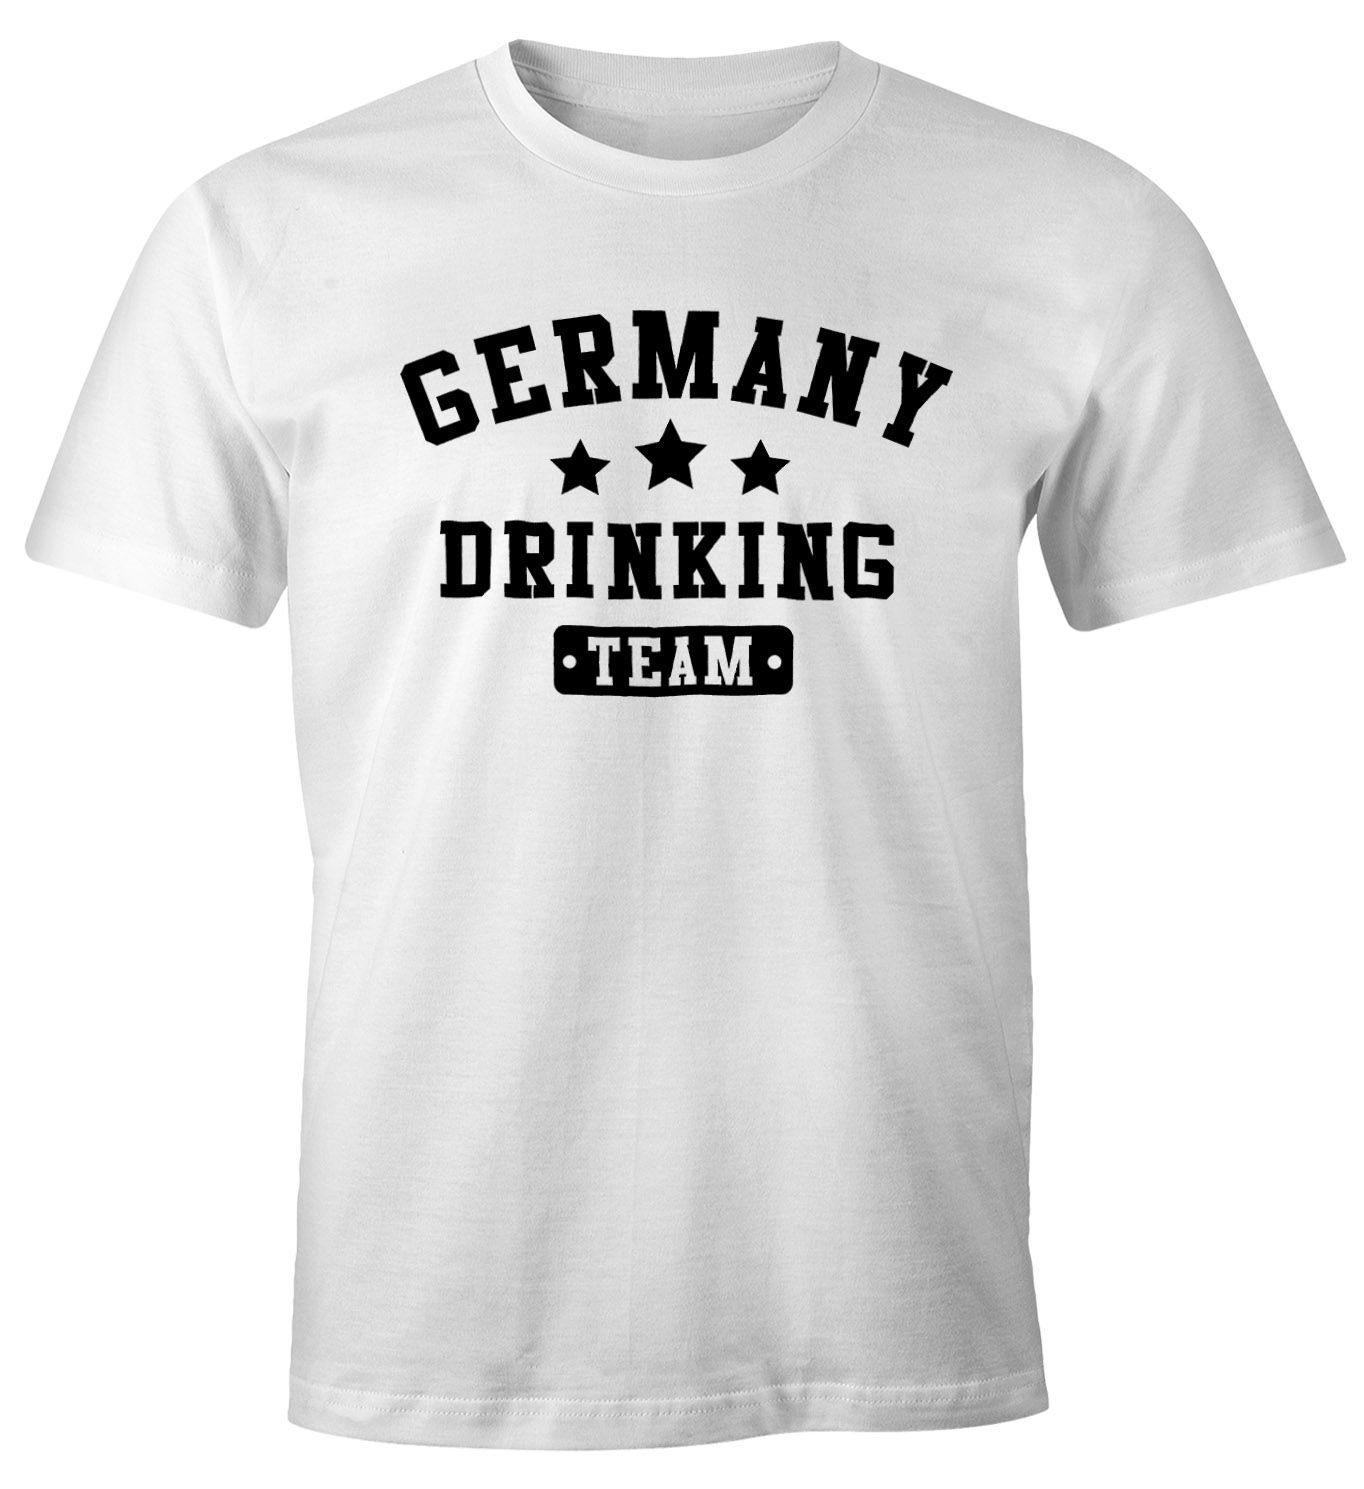 MoonWorks Print-Shirt Herren T-Shirt Germany Drinking Team Bier Fun-Shirt Moonworks® mit Print weiß